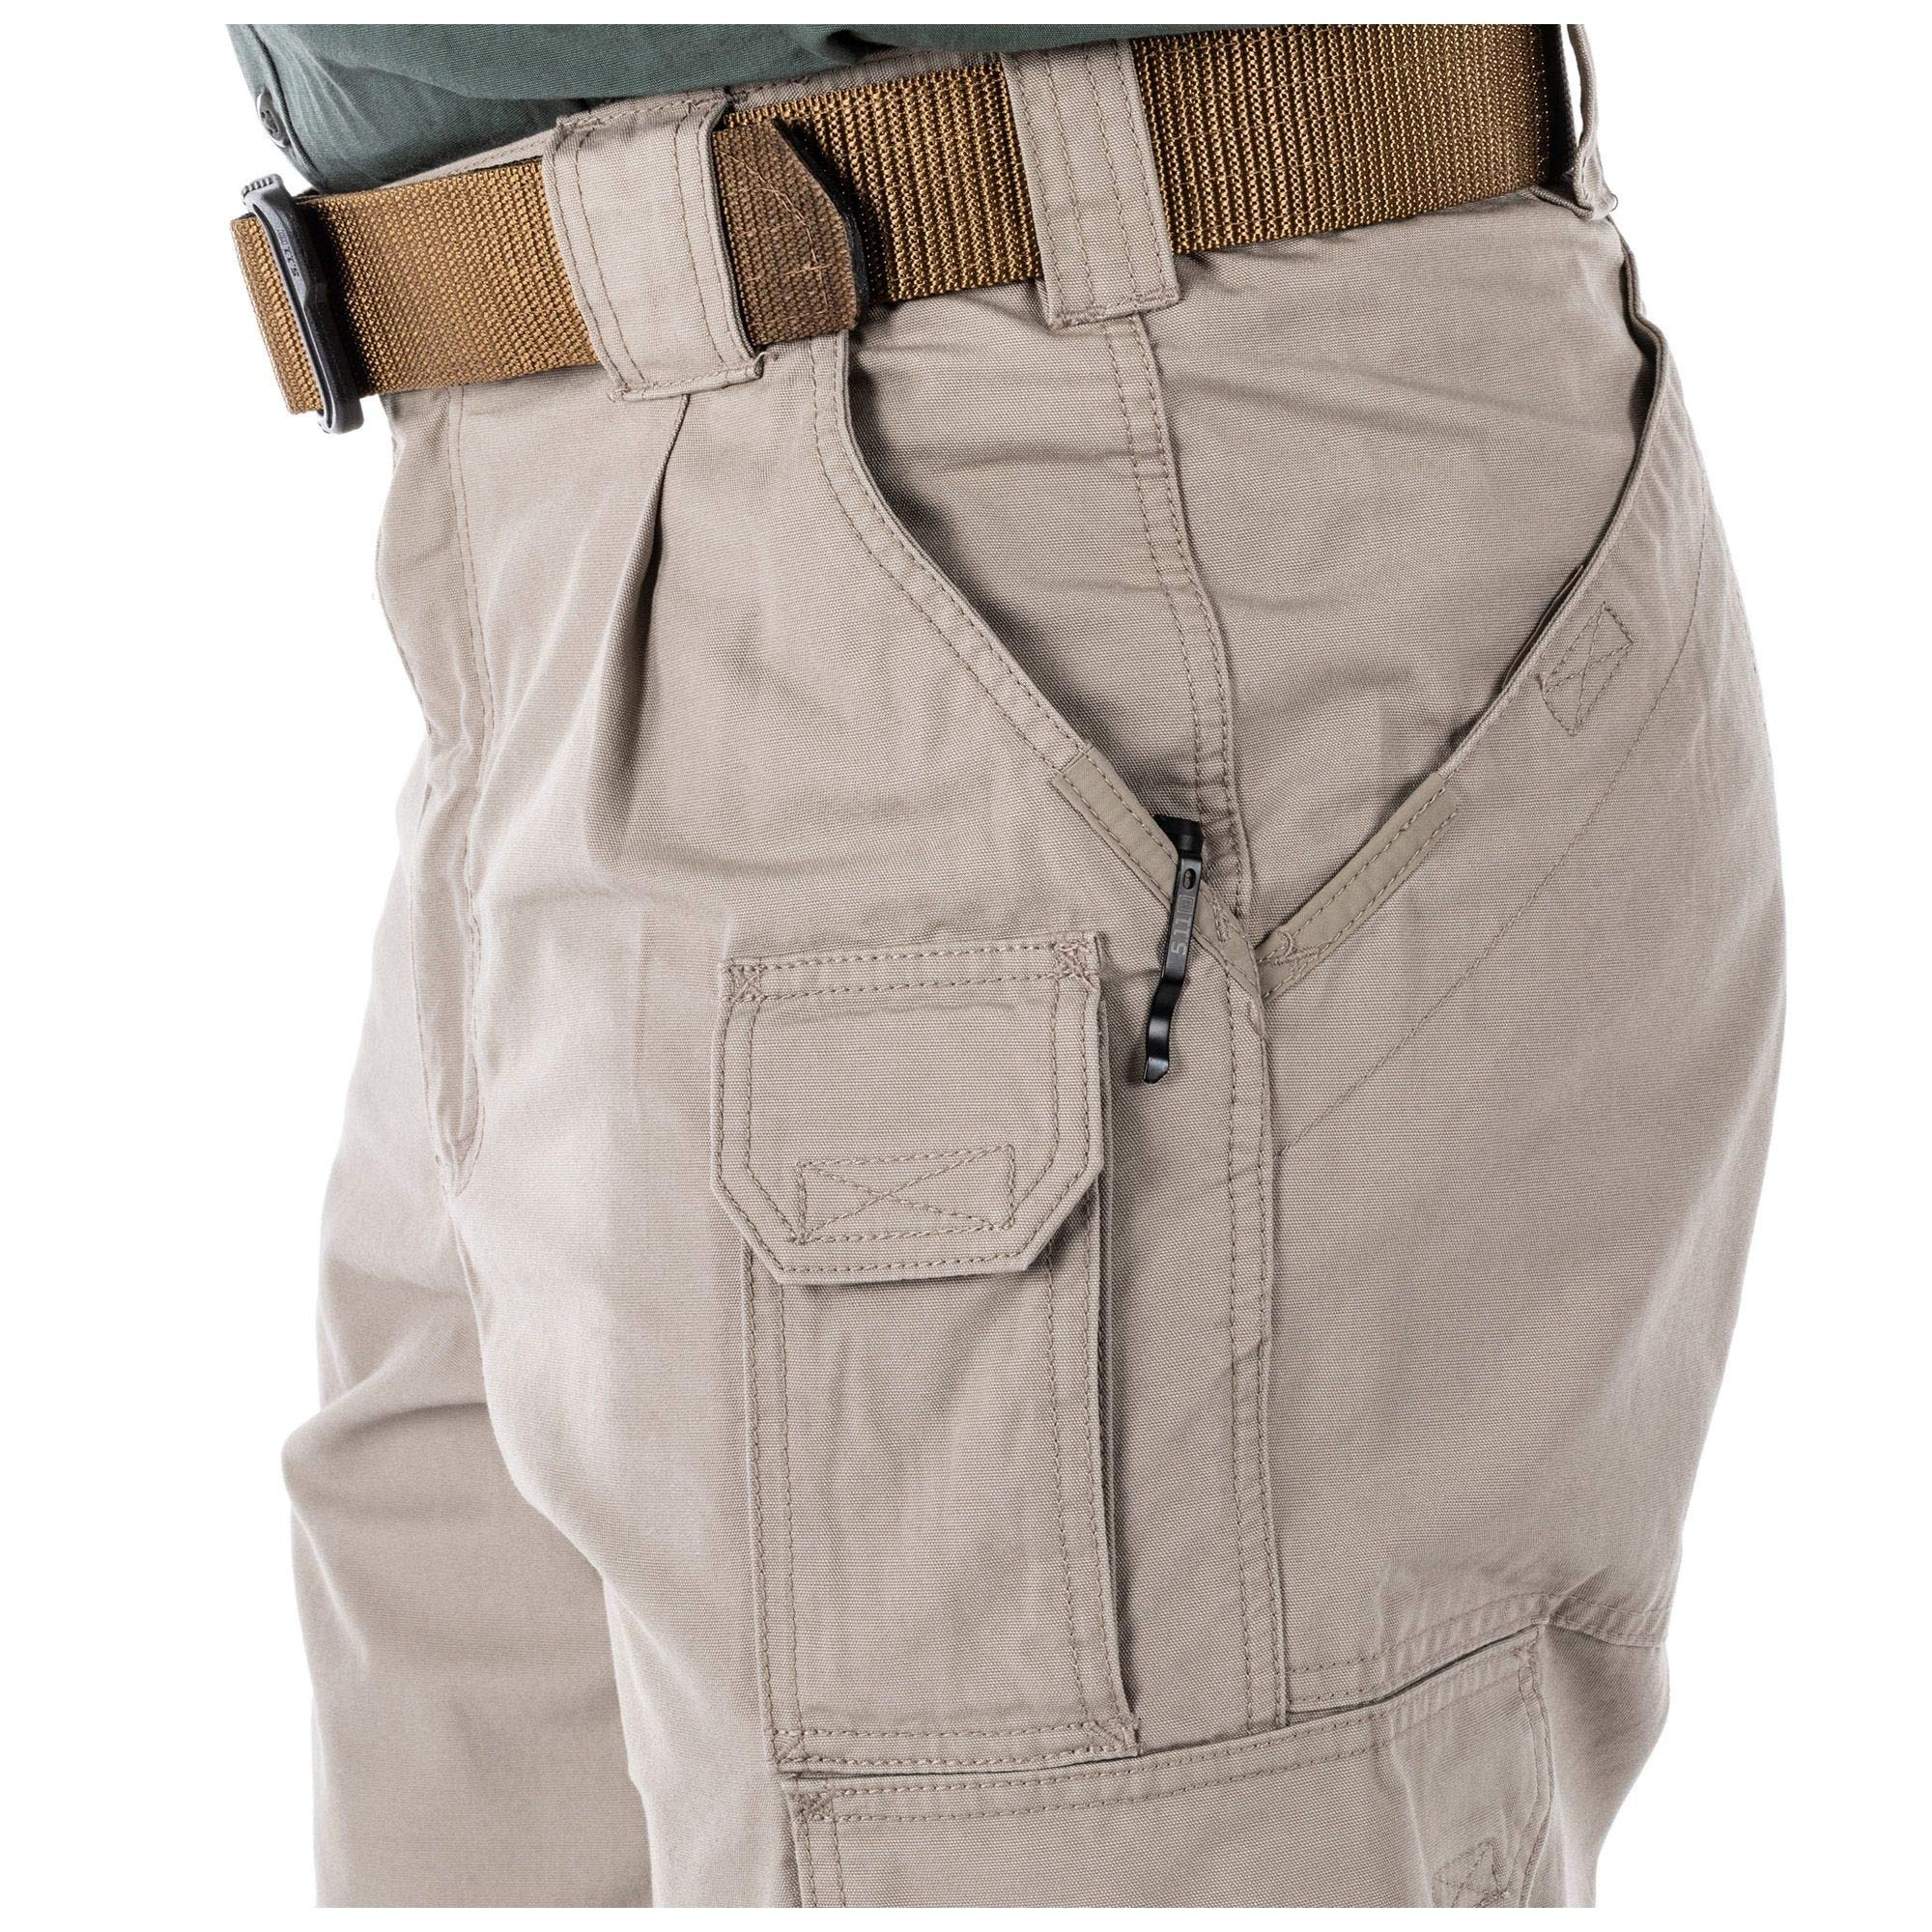 5.11 Tactical Men's Active Work Pants, Superior Fit, Double Reinforced, 100% Cotton, Style 74251